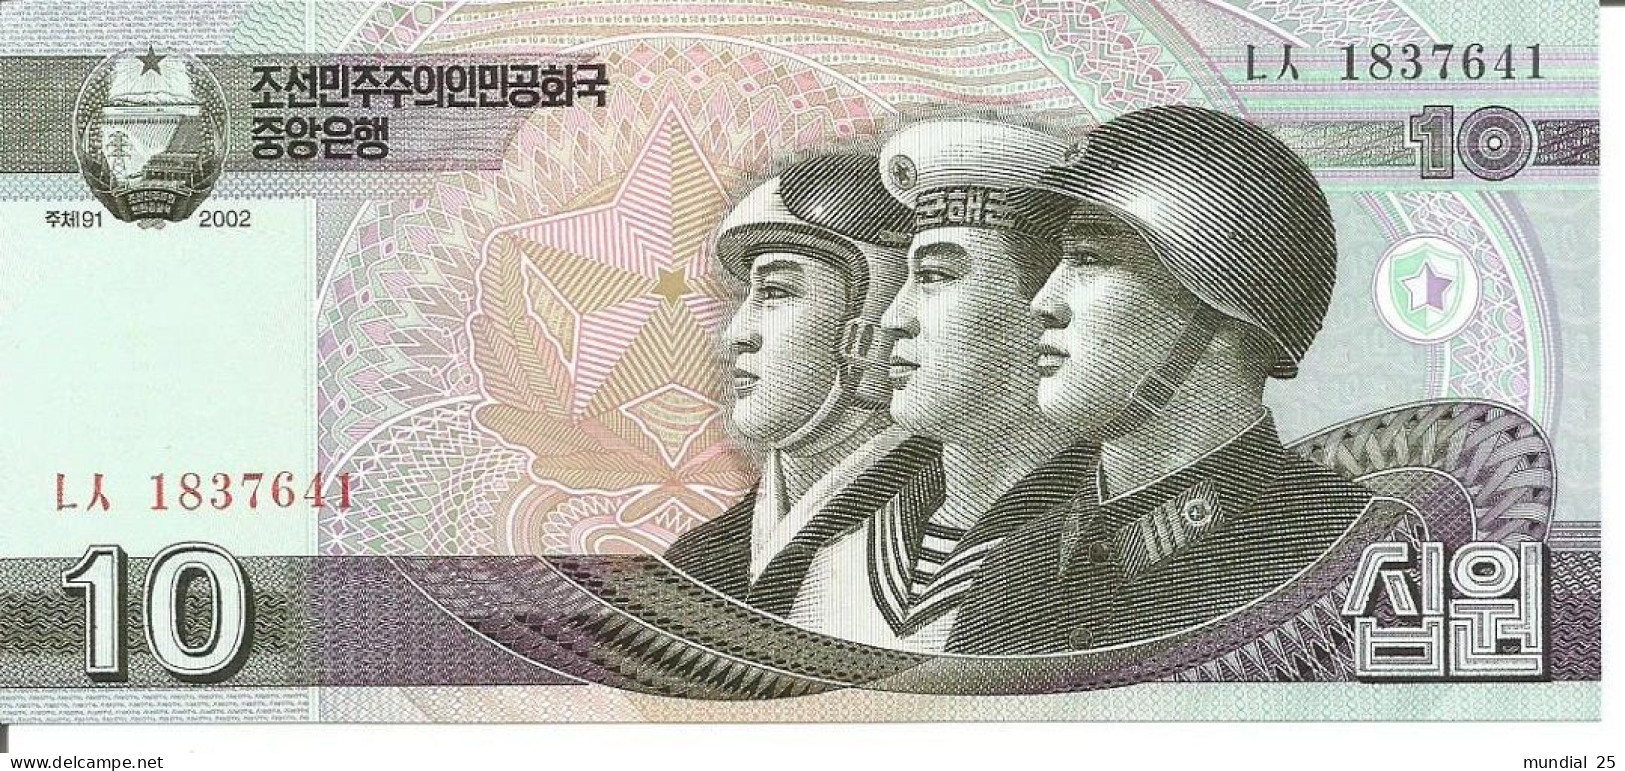 3 KOREA, NORTH NOTES 10 WON 2002 - Korea, North